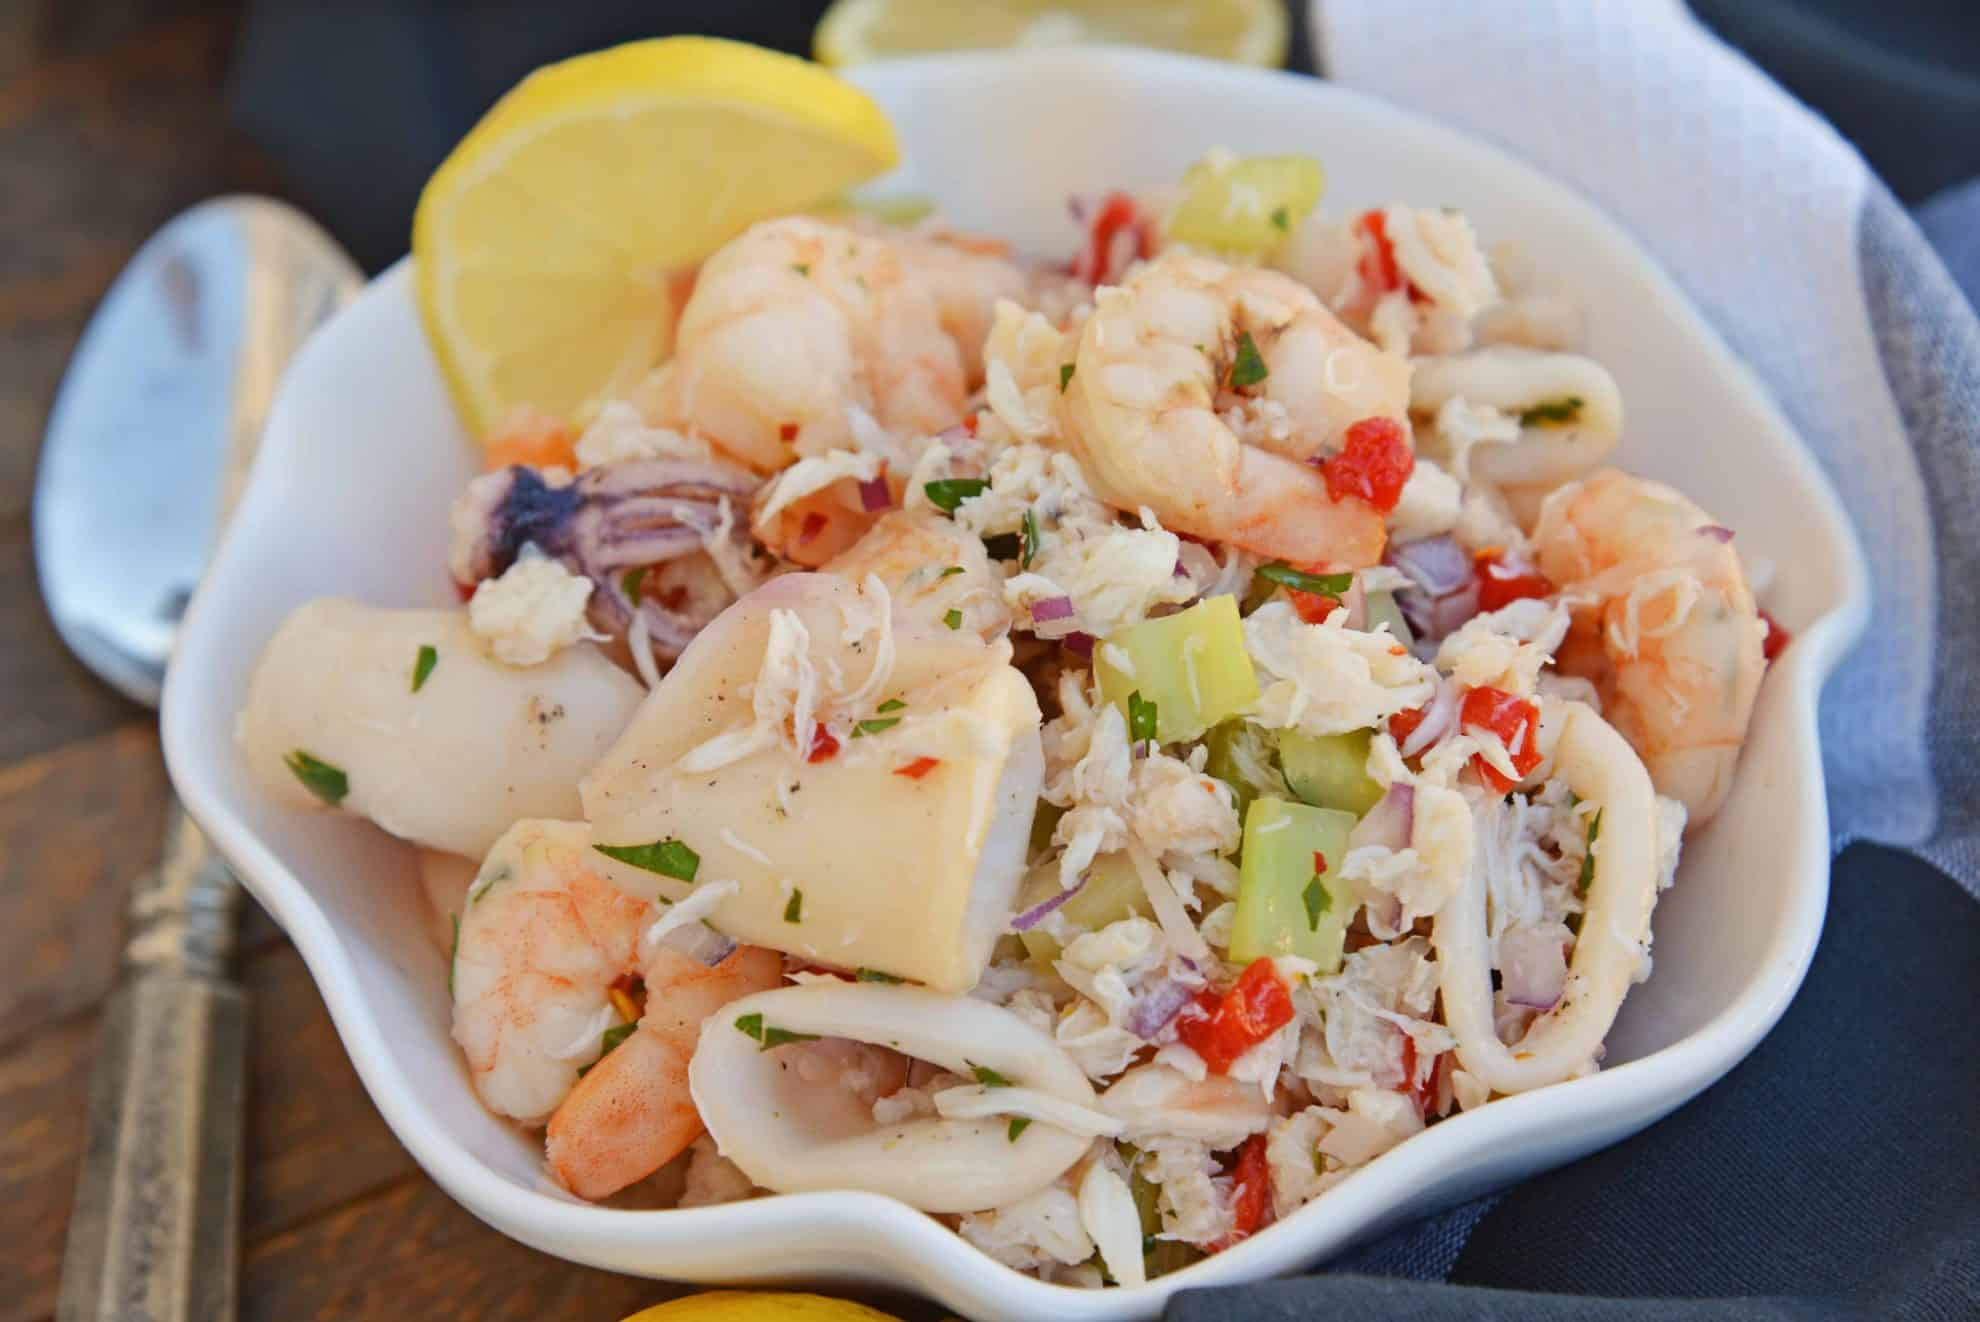 Seafood Salad Recipe With Crabmeat And Shrimp
 Italian Seafood Salad